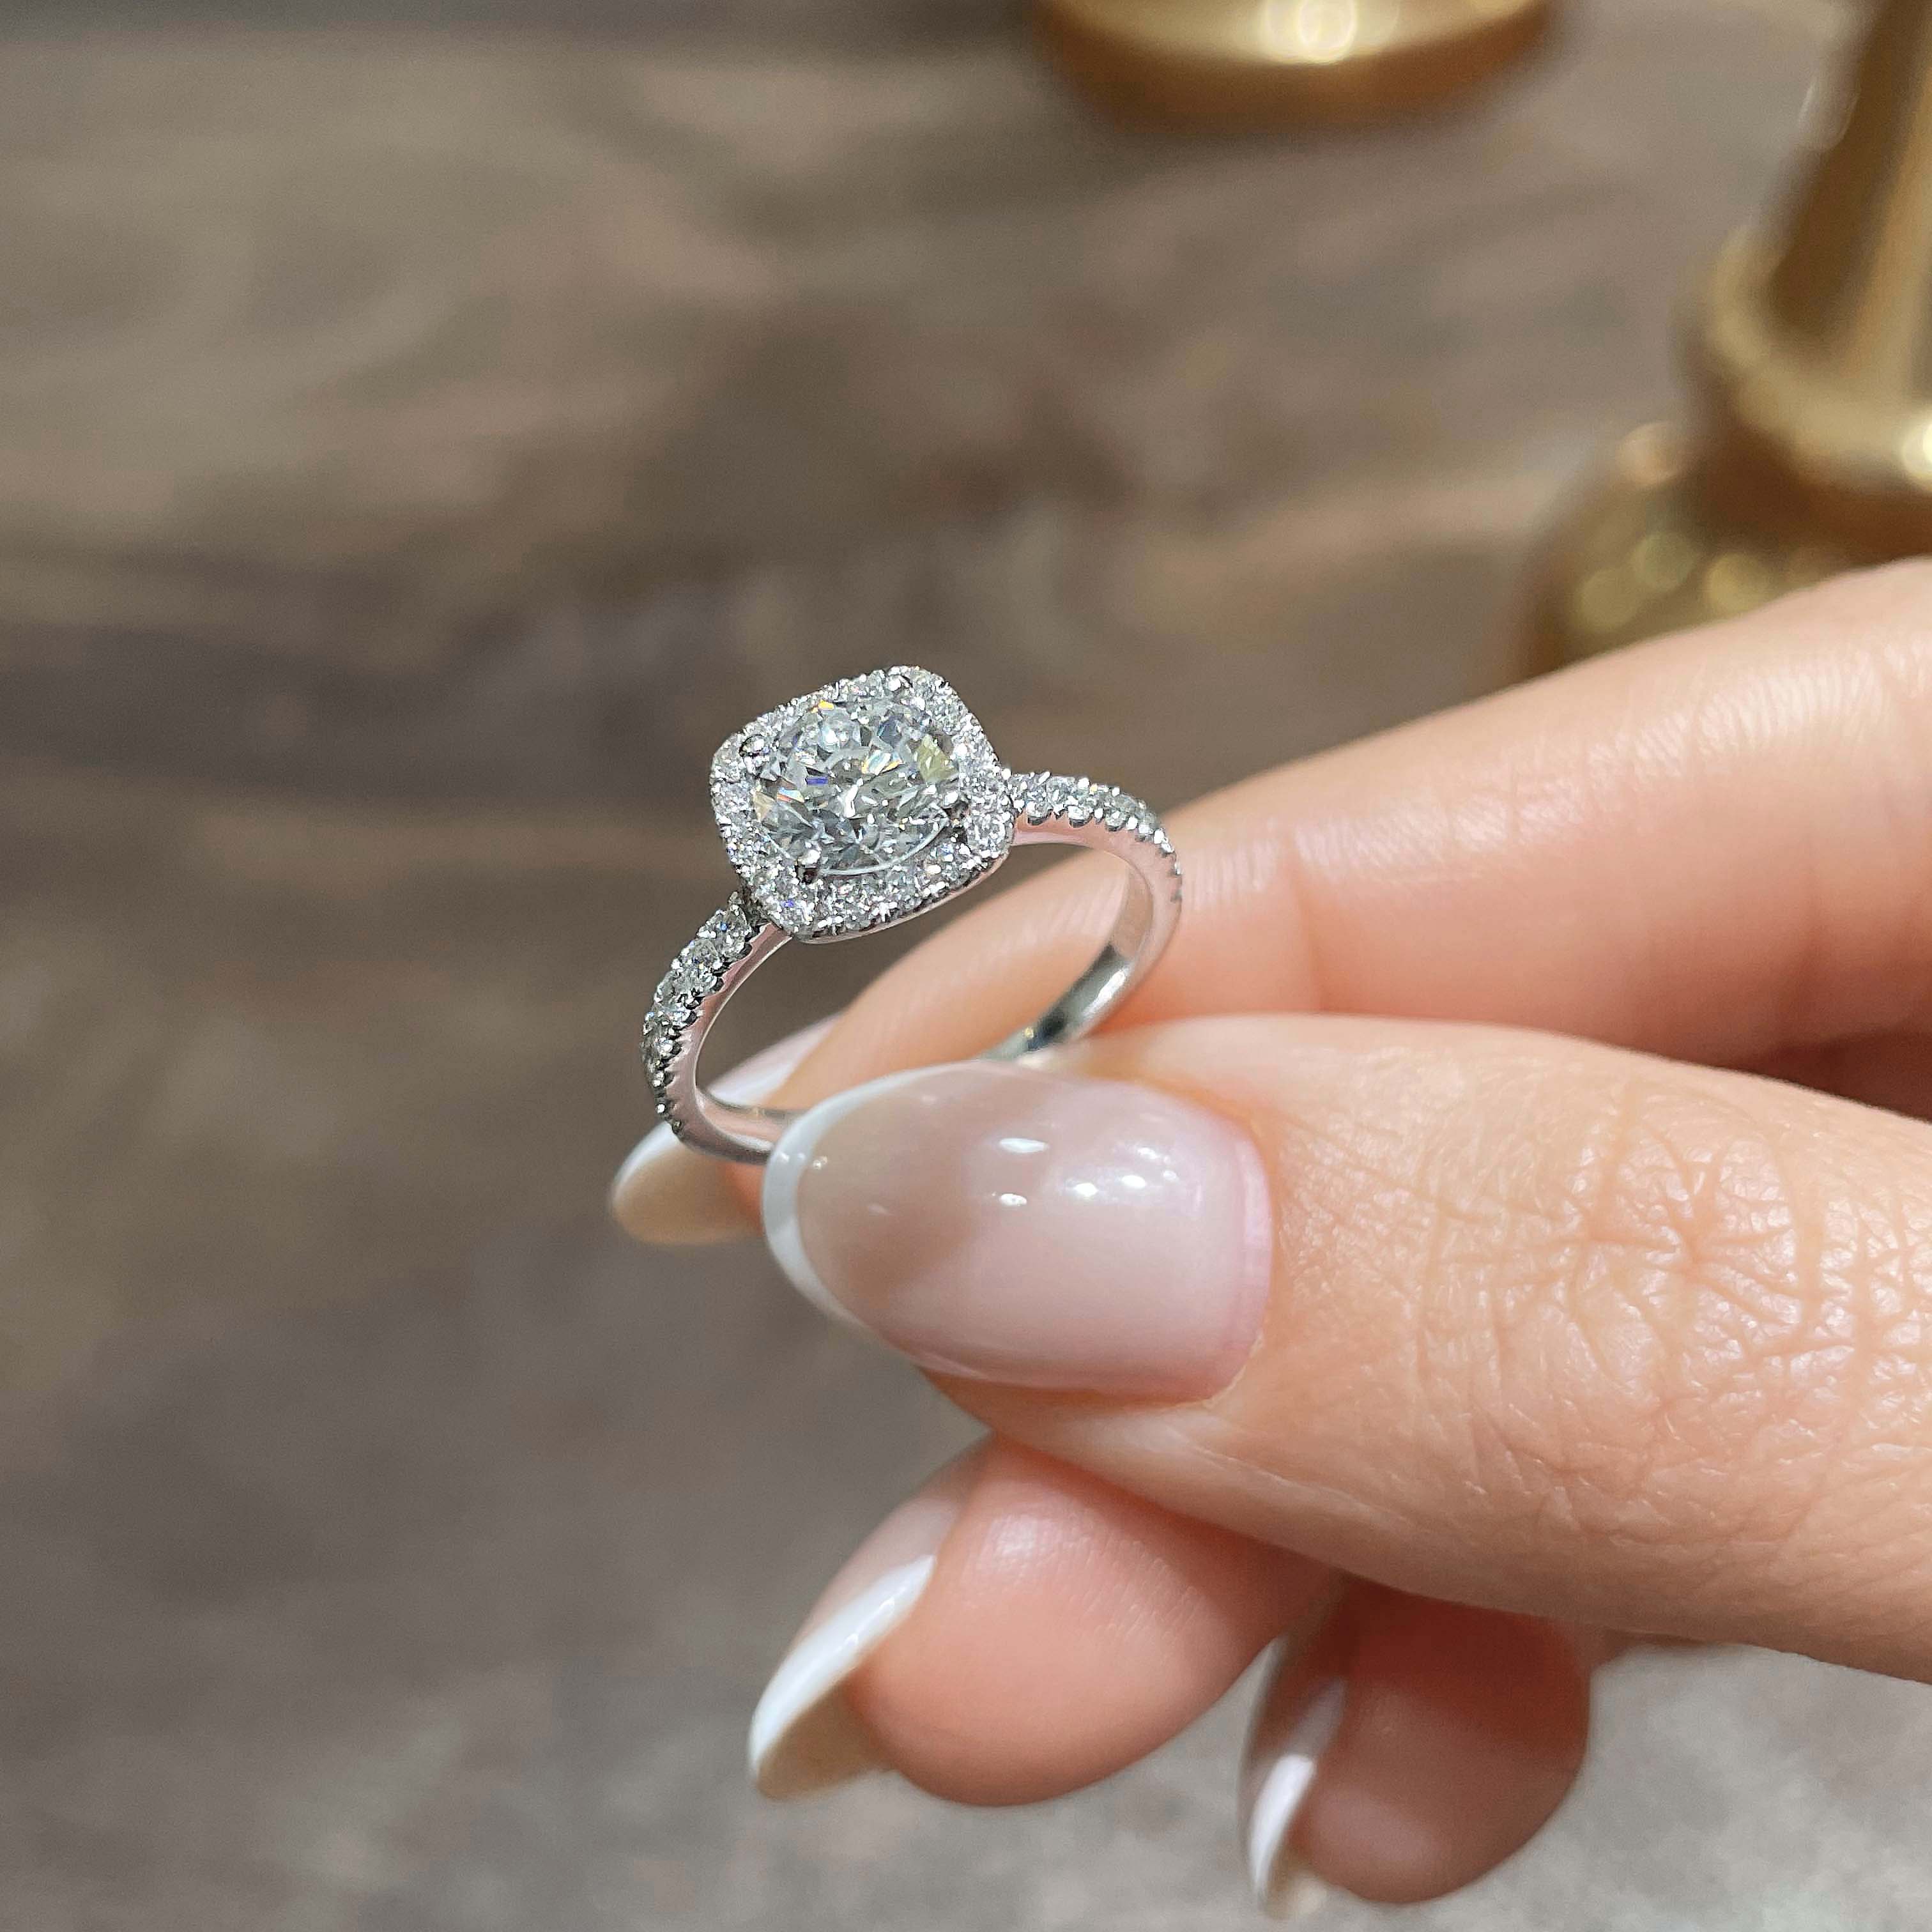 Claudia Diamond Engagement Ring   (1.4 Carat) -18K White Gold